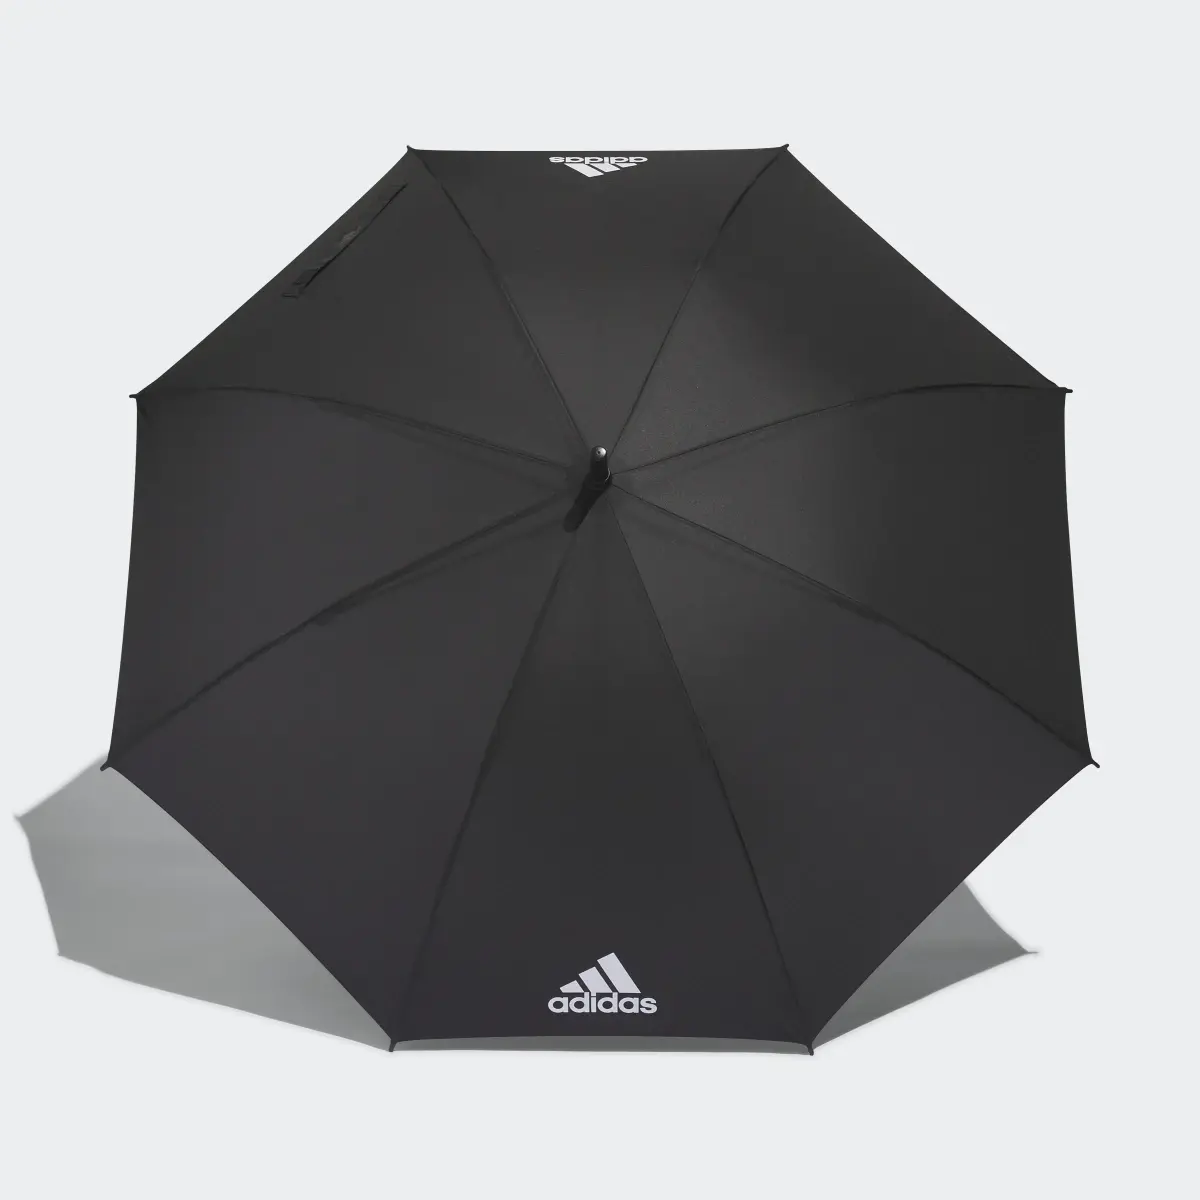 Adidas Single Canopy Umbrella 60". 2